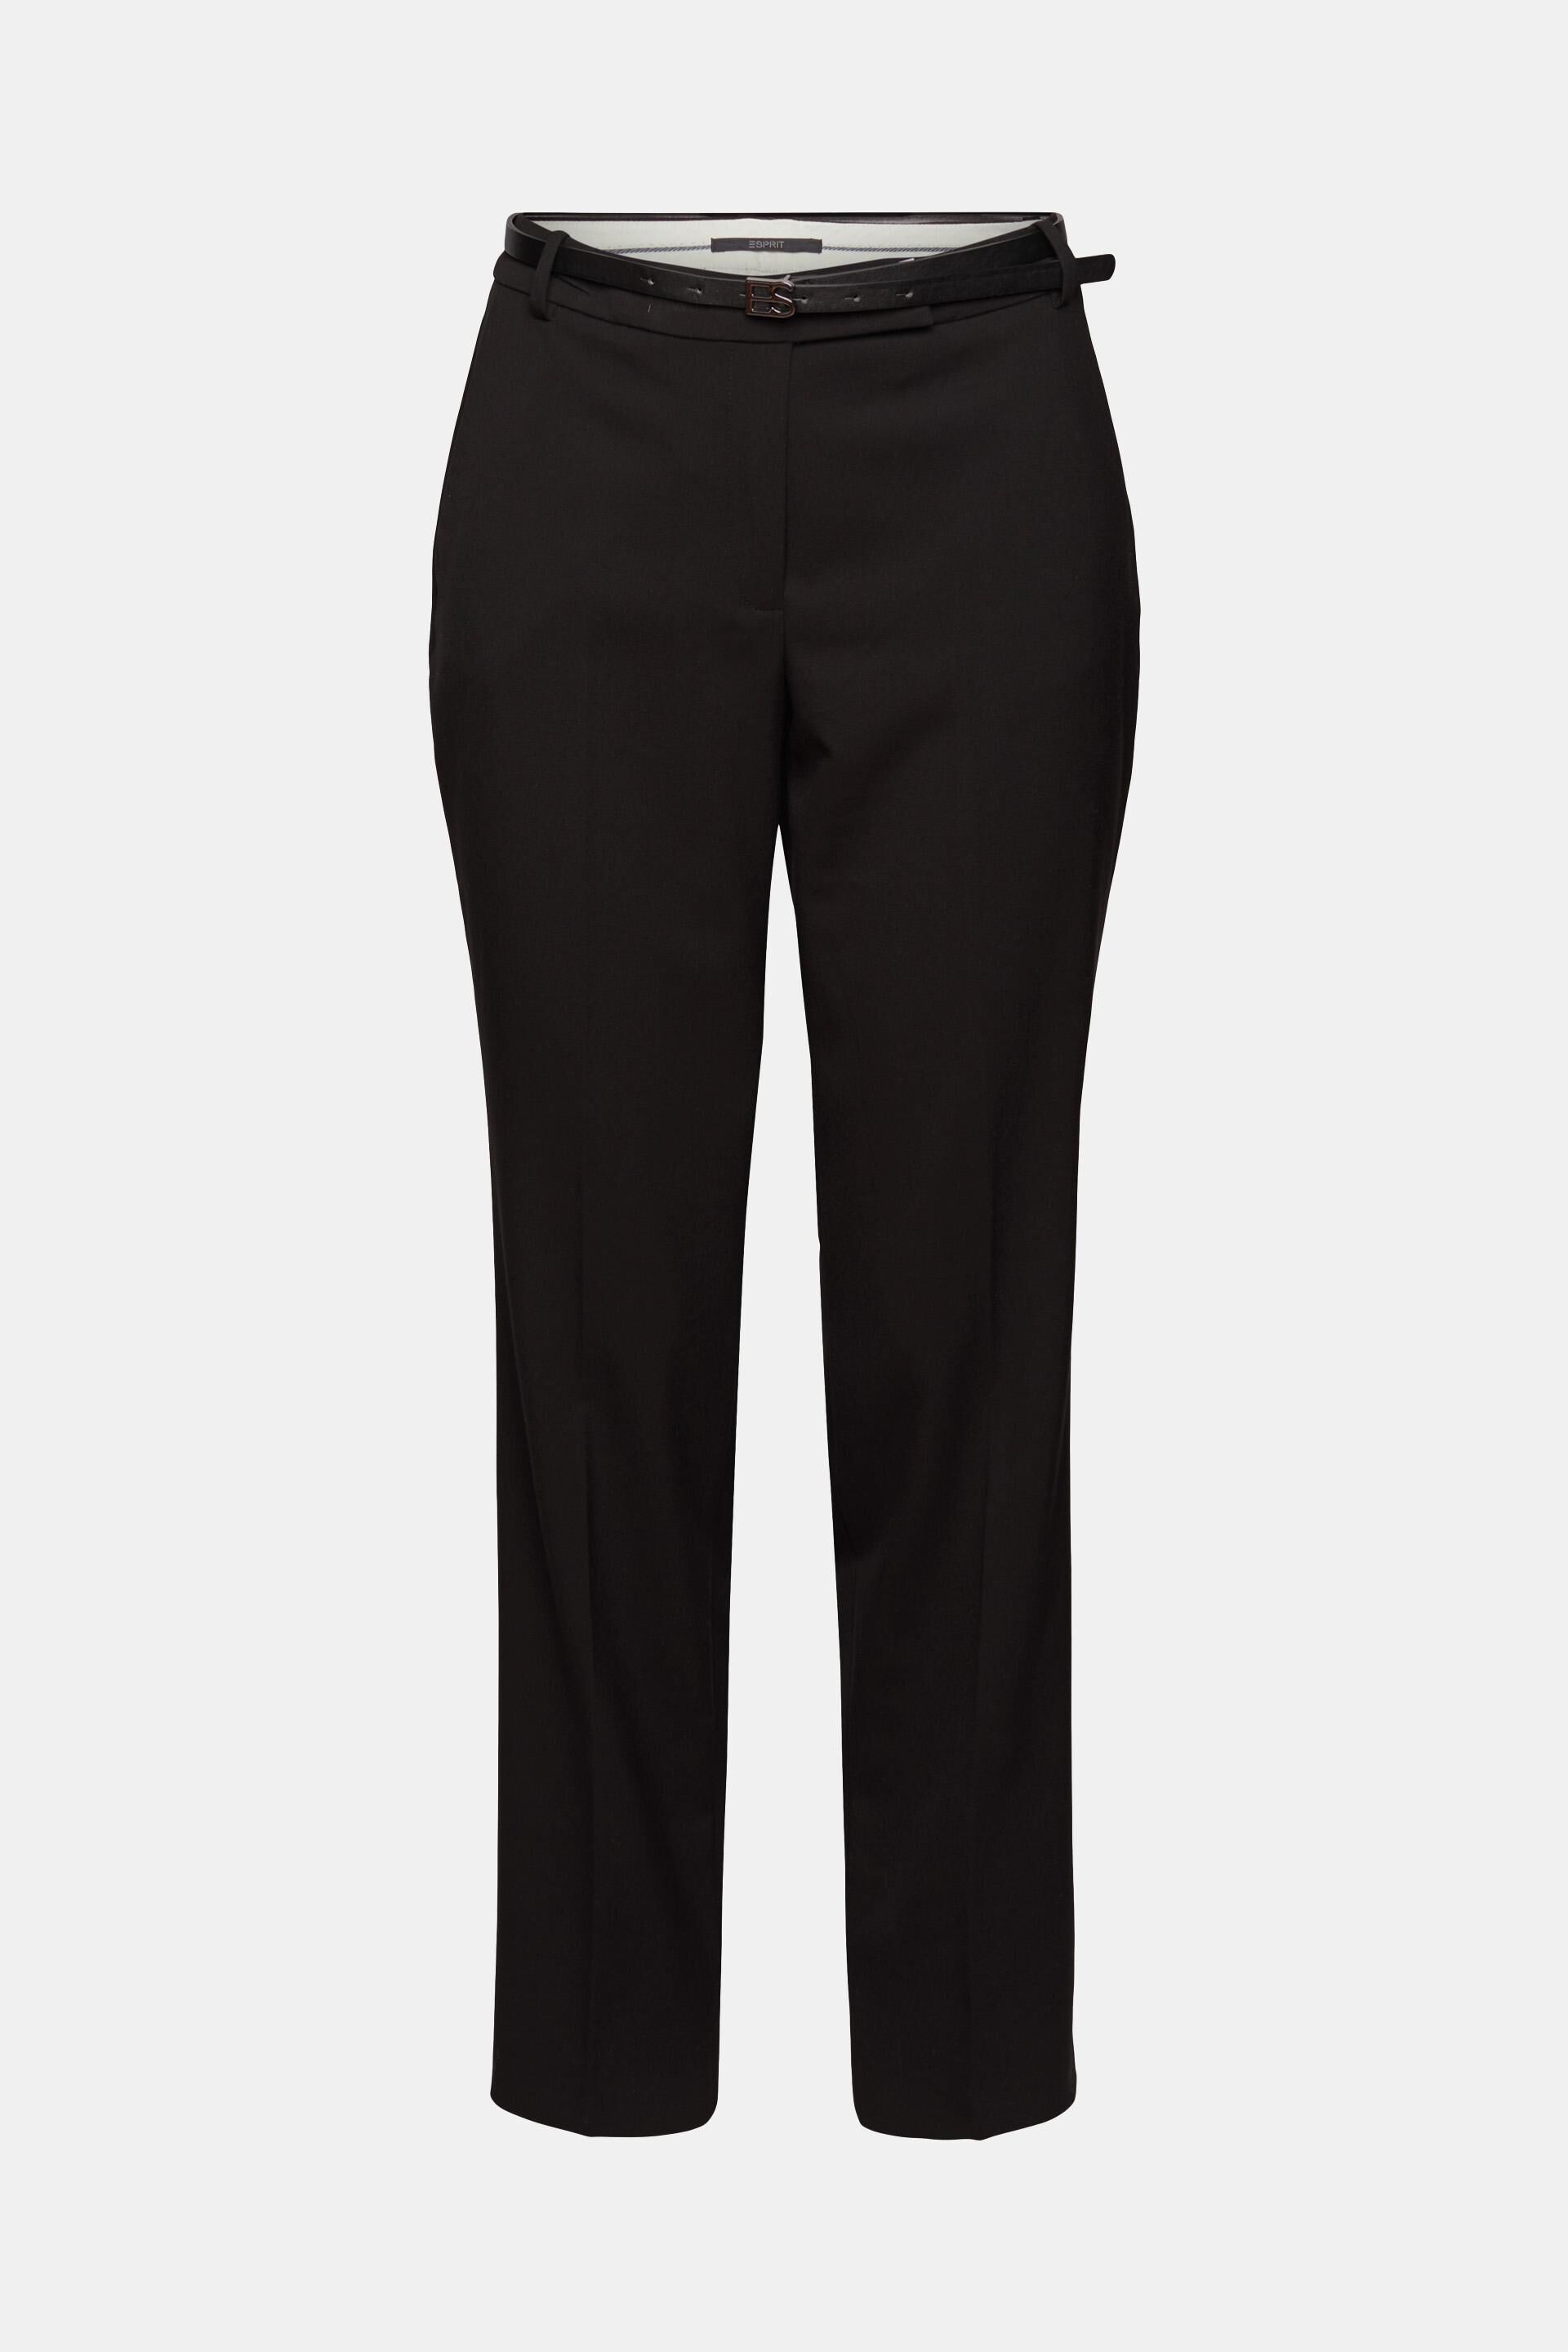 Esprit Spodnie materia\u0142owe czarny-br\u0105z Na ca\u0142ej powierzchni Moda Spodnie Spodnie materiałowe 